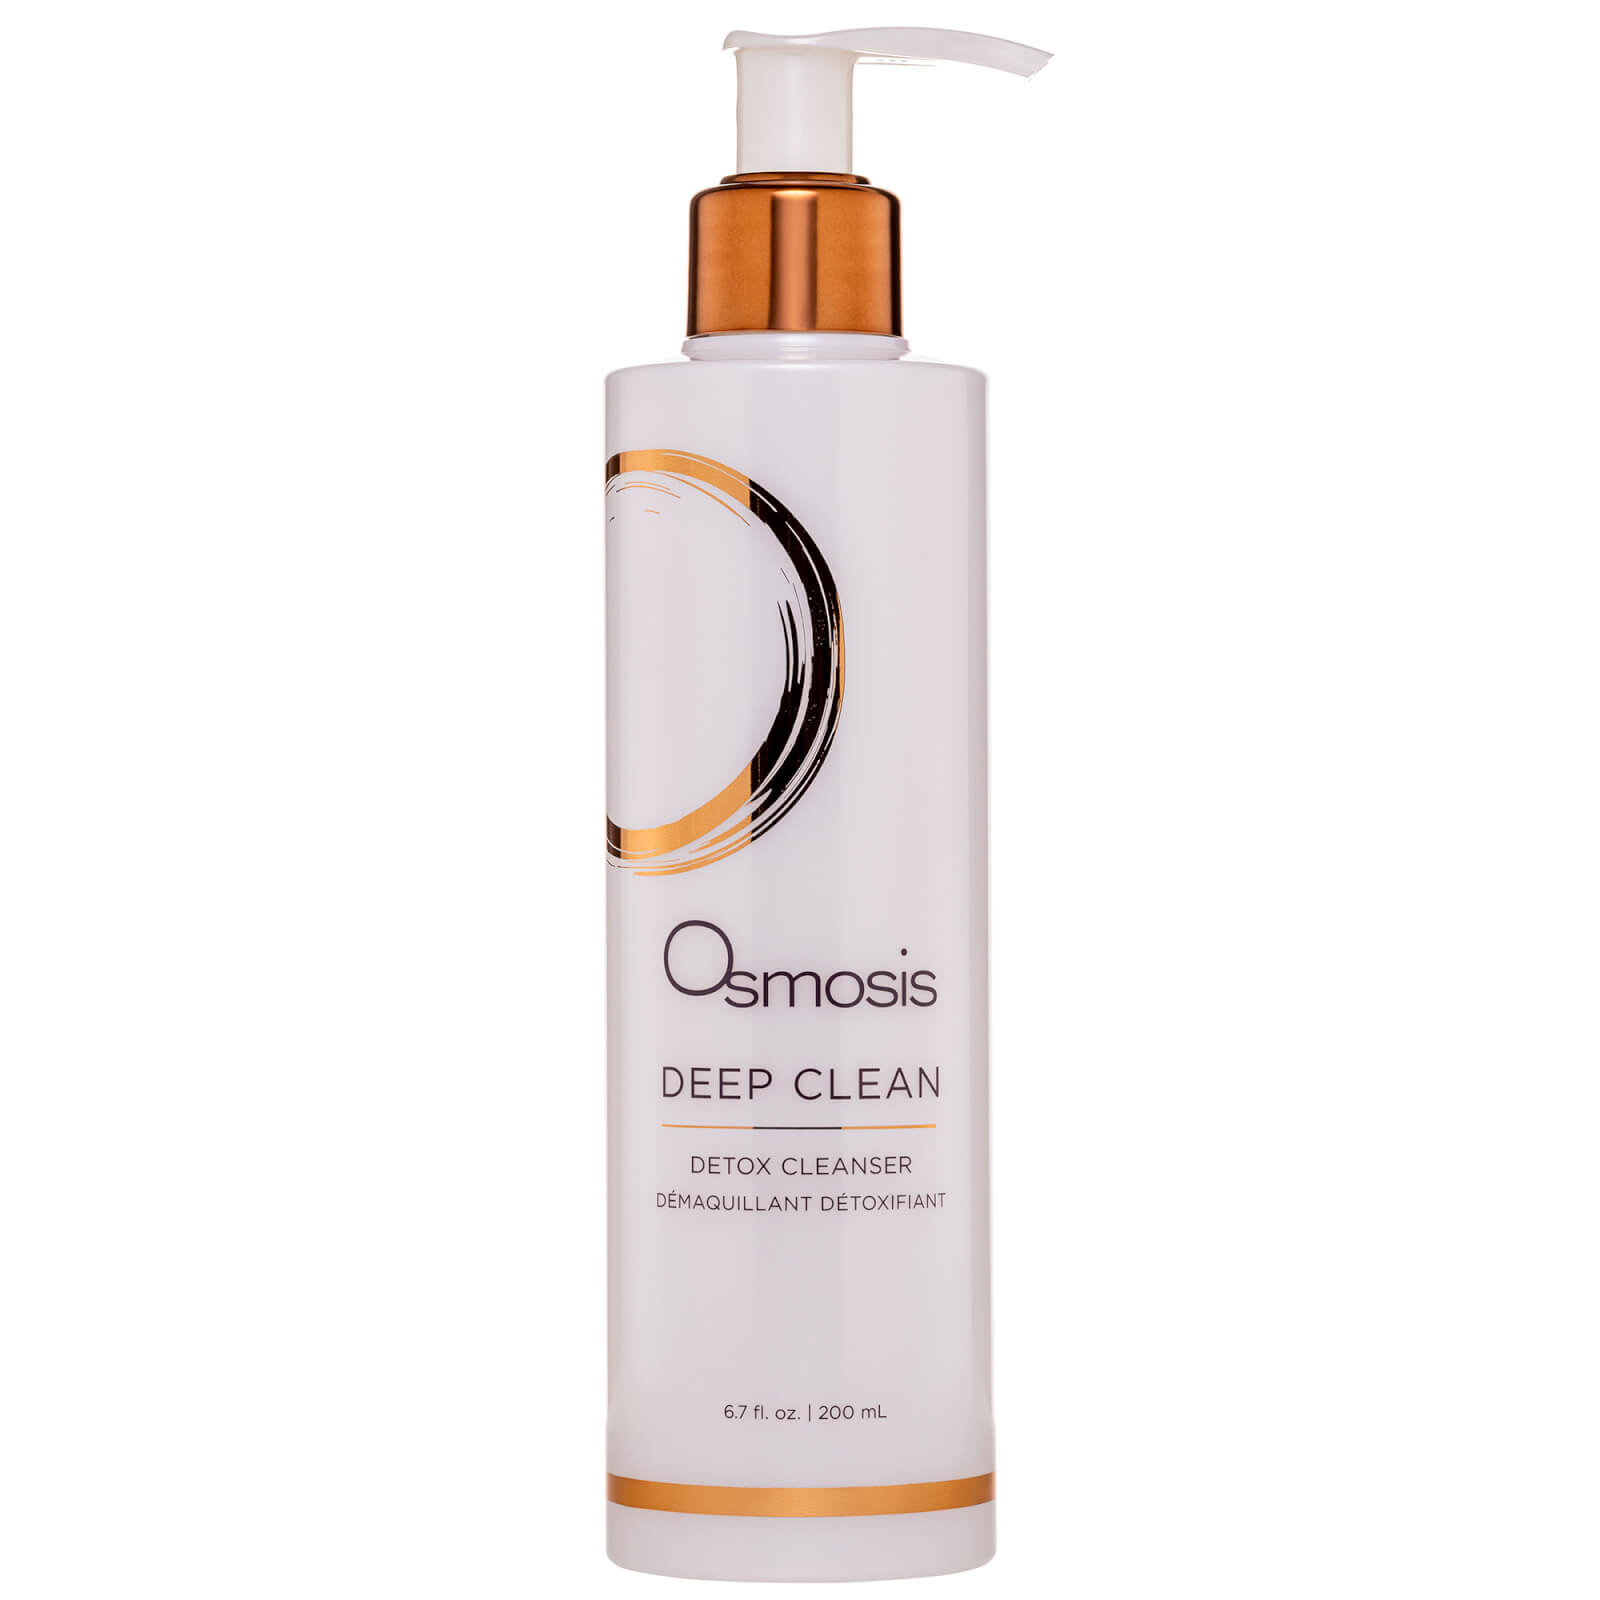 Osmosis Beauty Deep Clean Detox Cleanser 200ml